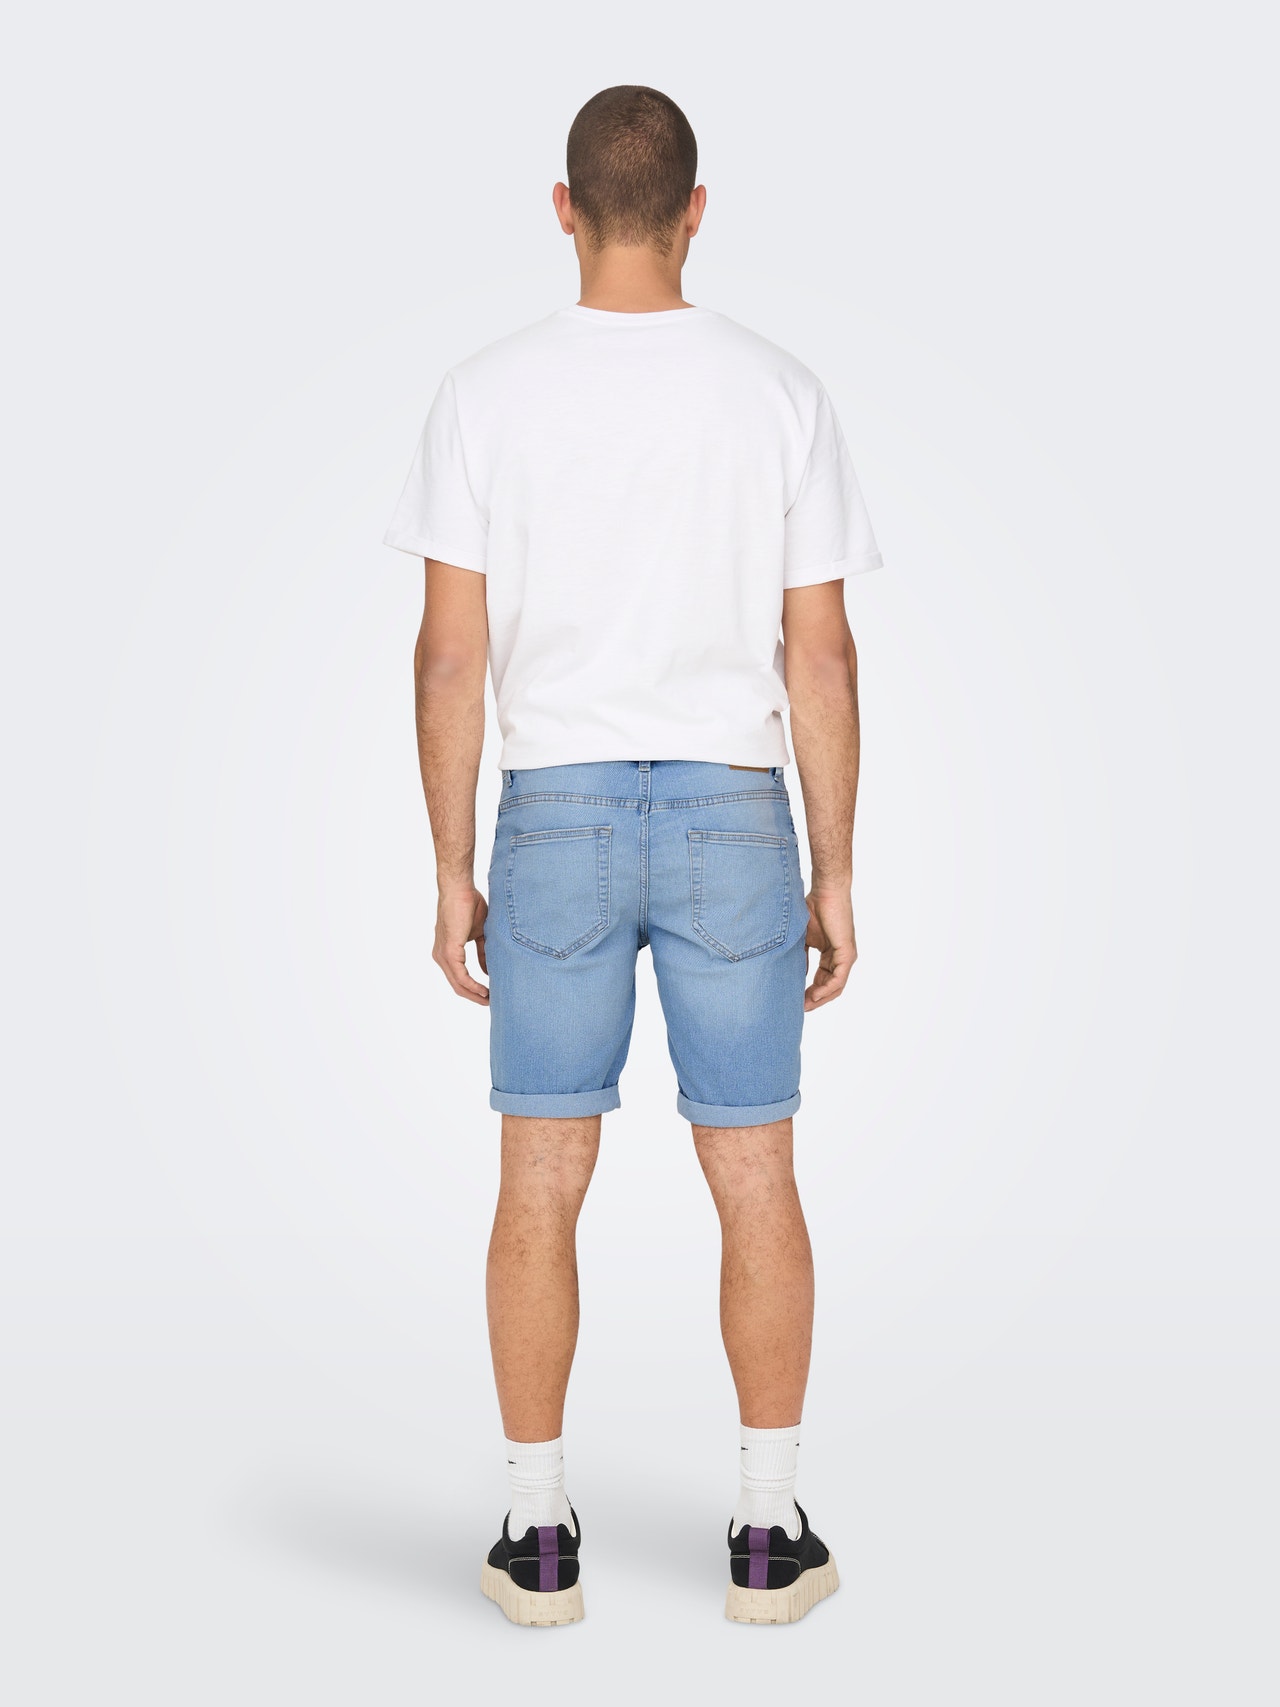 ONLY & SONS Shorts Regular Fit -Light Blue Denim - 22024330